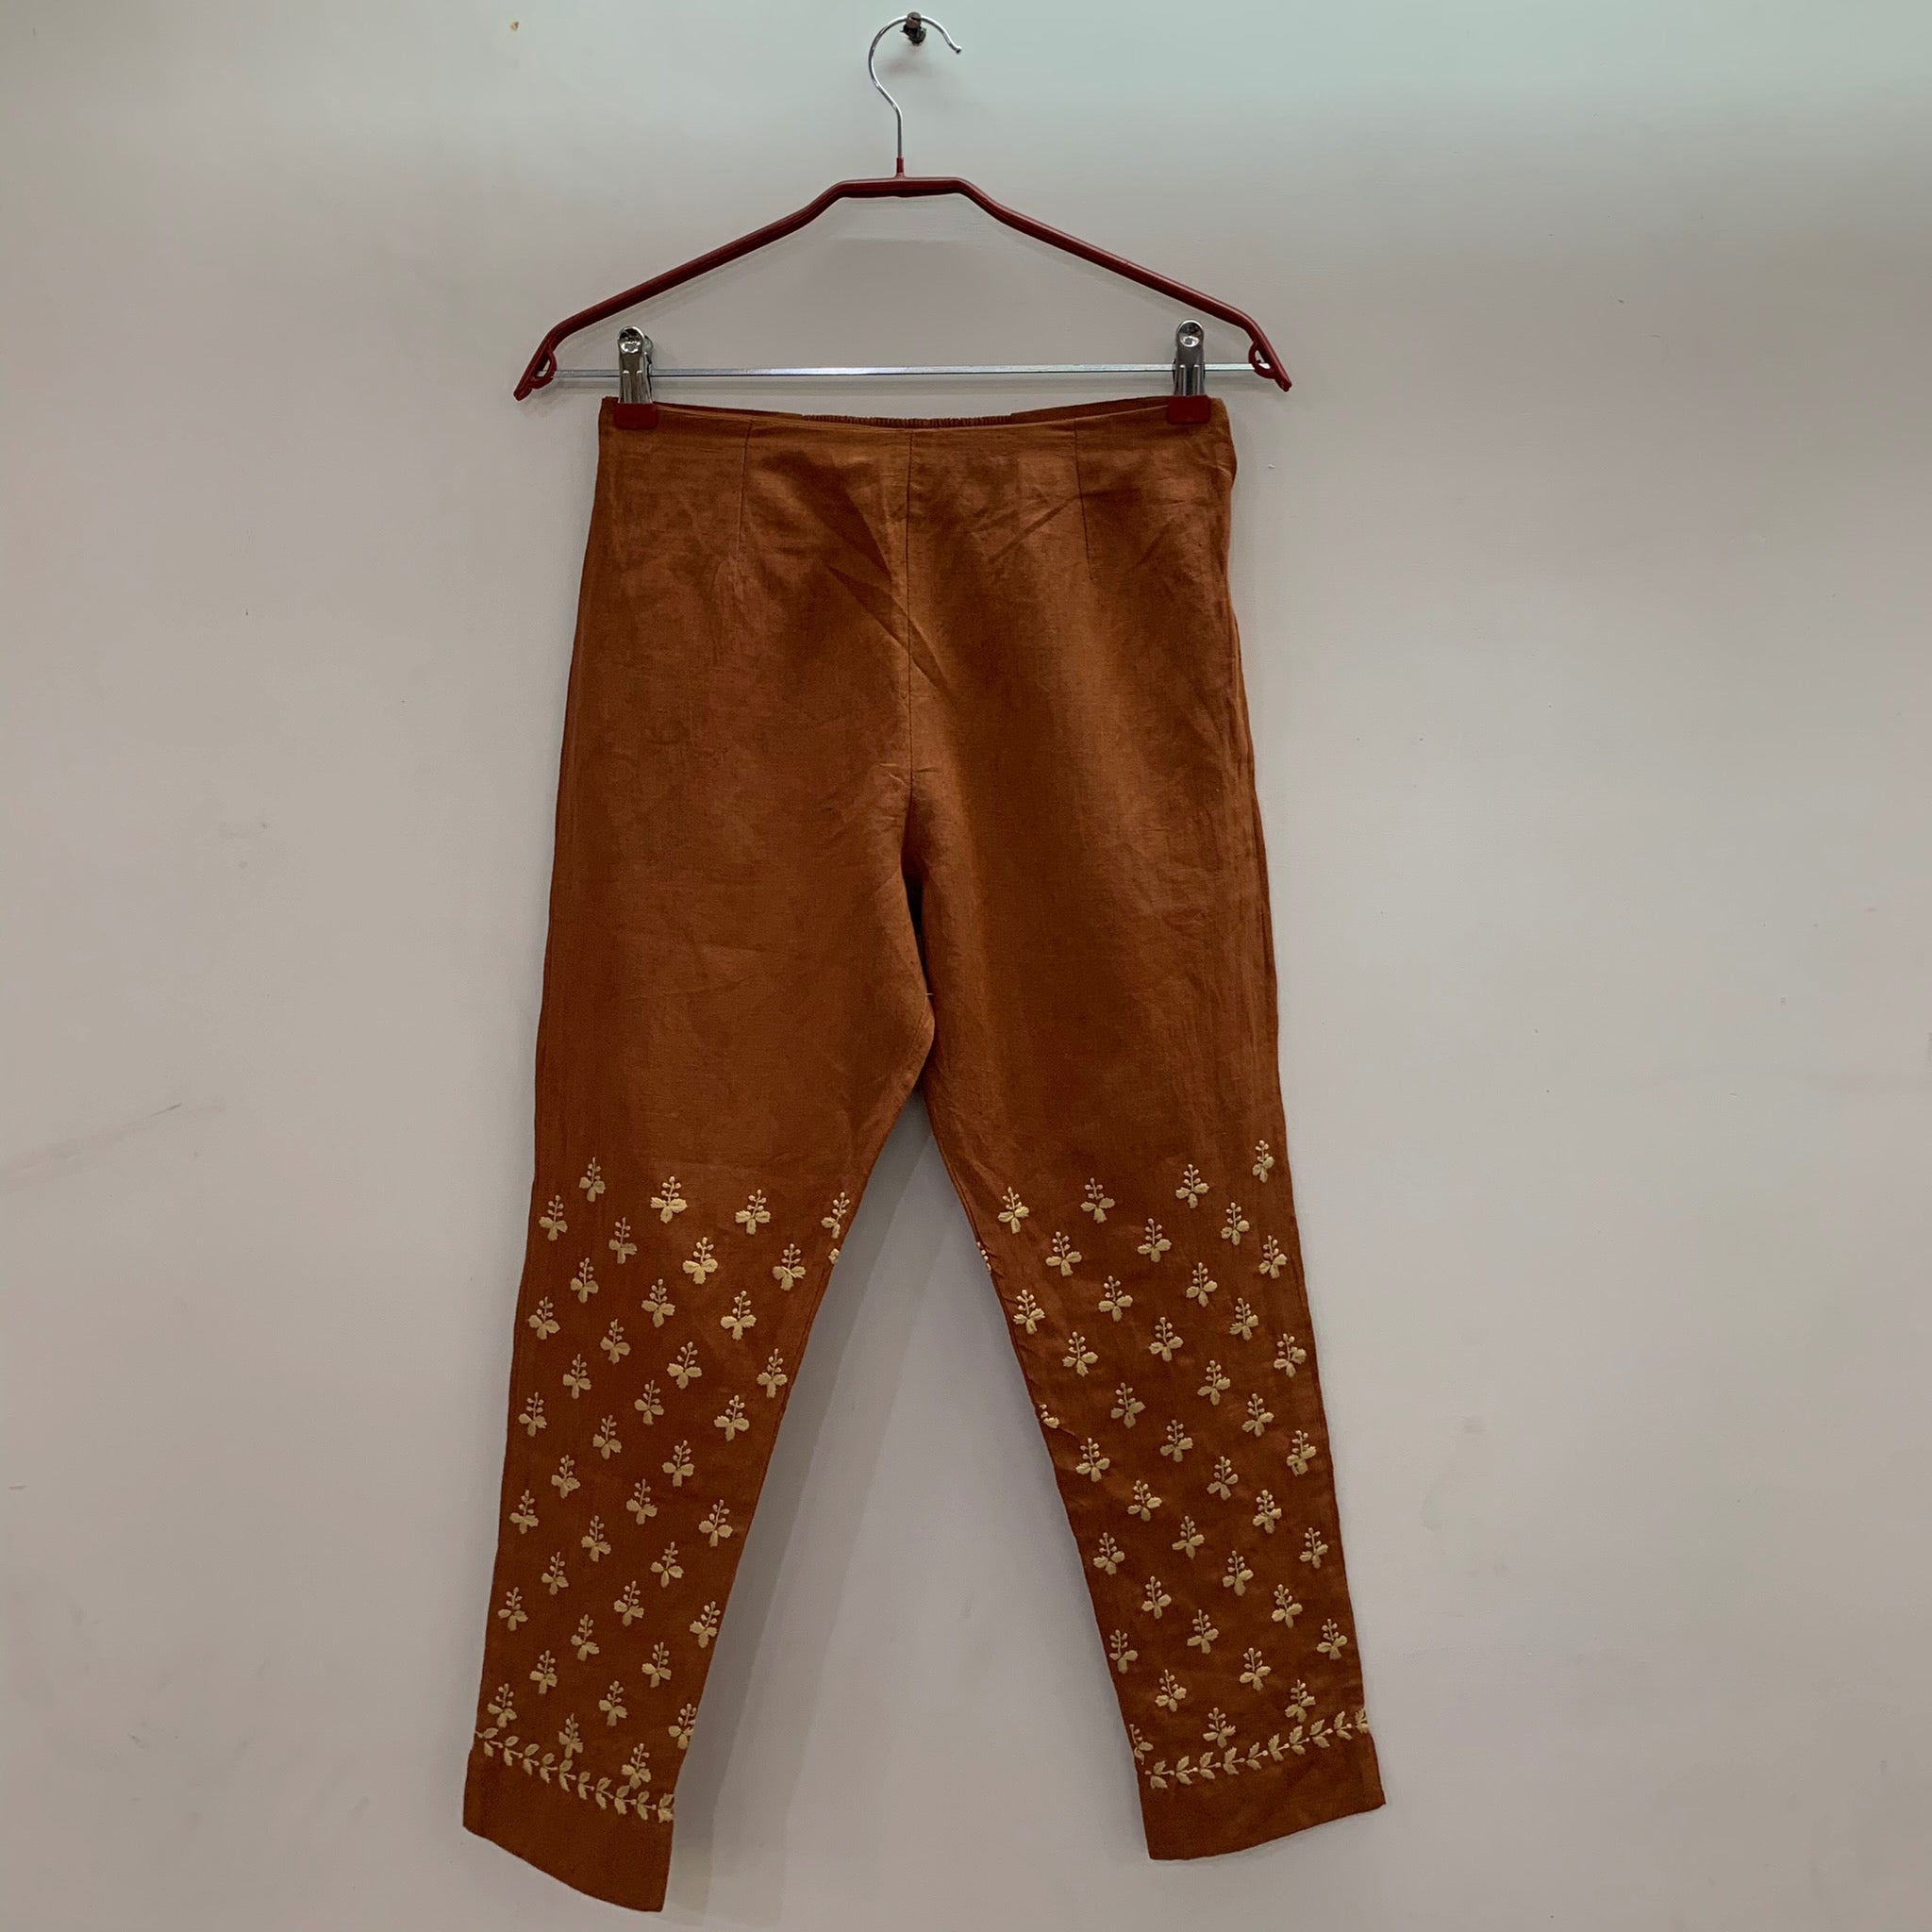 Rust linen pants